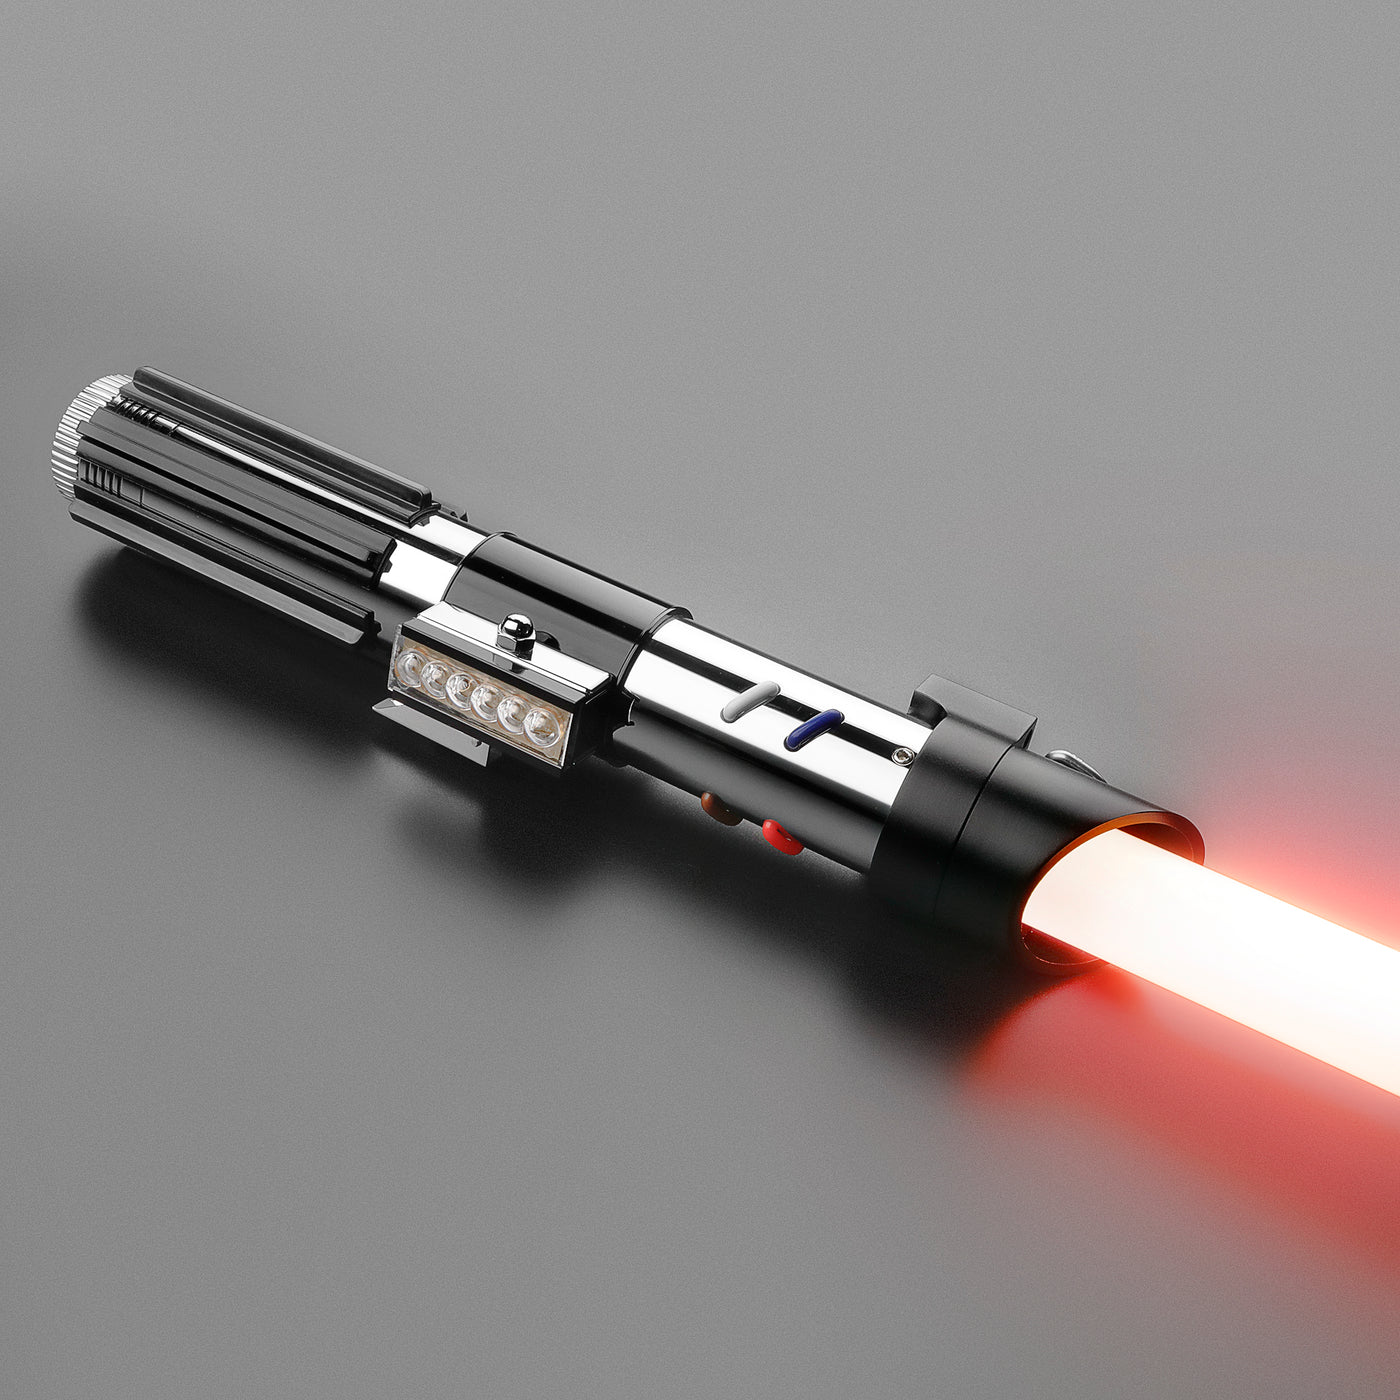 Darth Variant - KenJo Sabers - Premium RGB Baselit - Star Wars Lightsaber replica Jedi Sith - Best sabershop Europe - Nederland light sabers kopen -